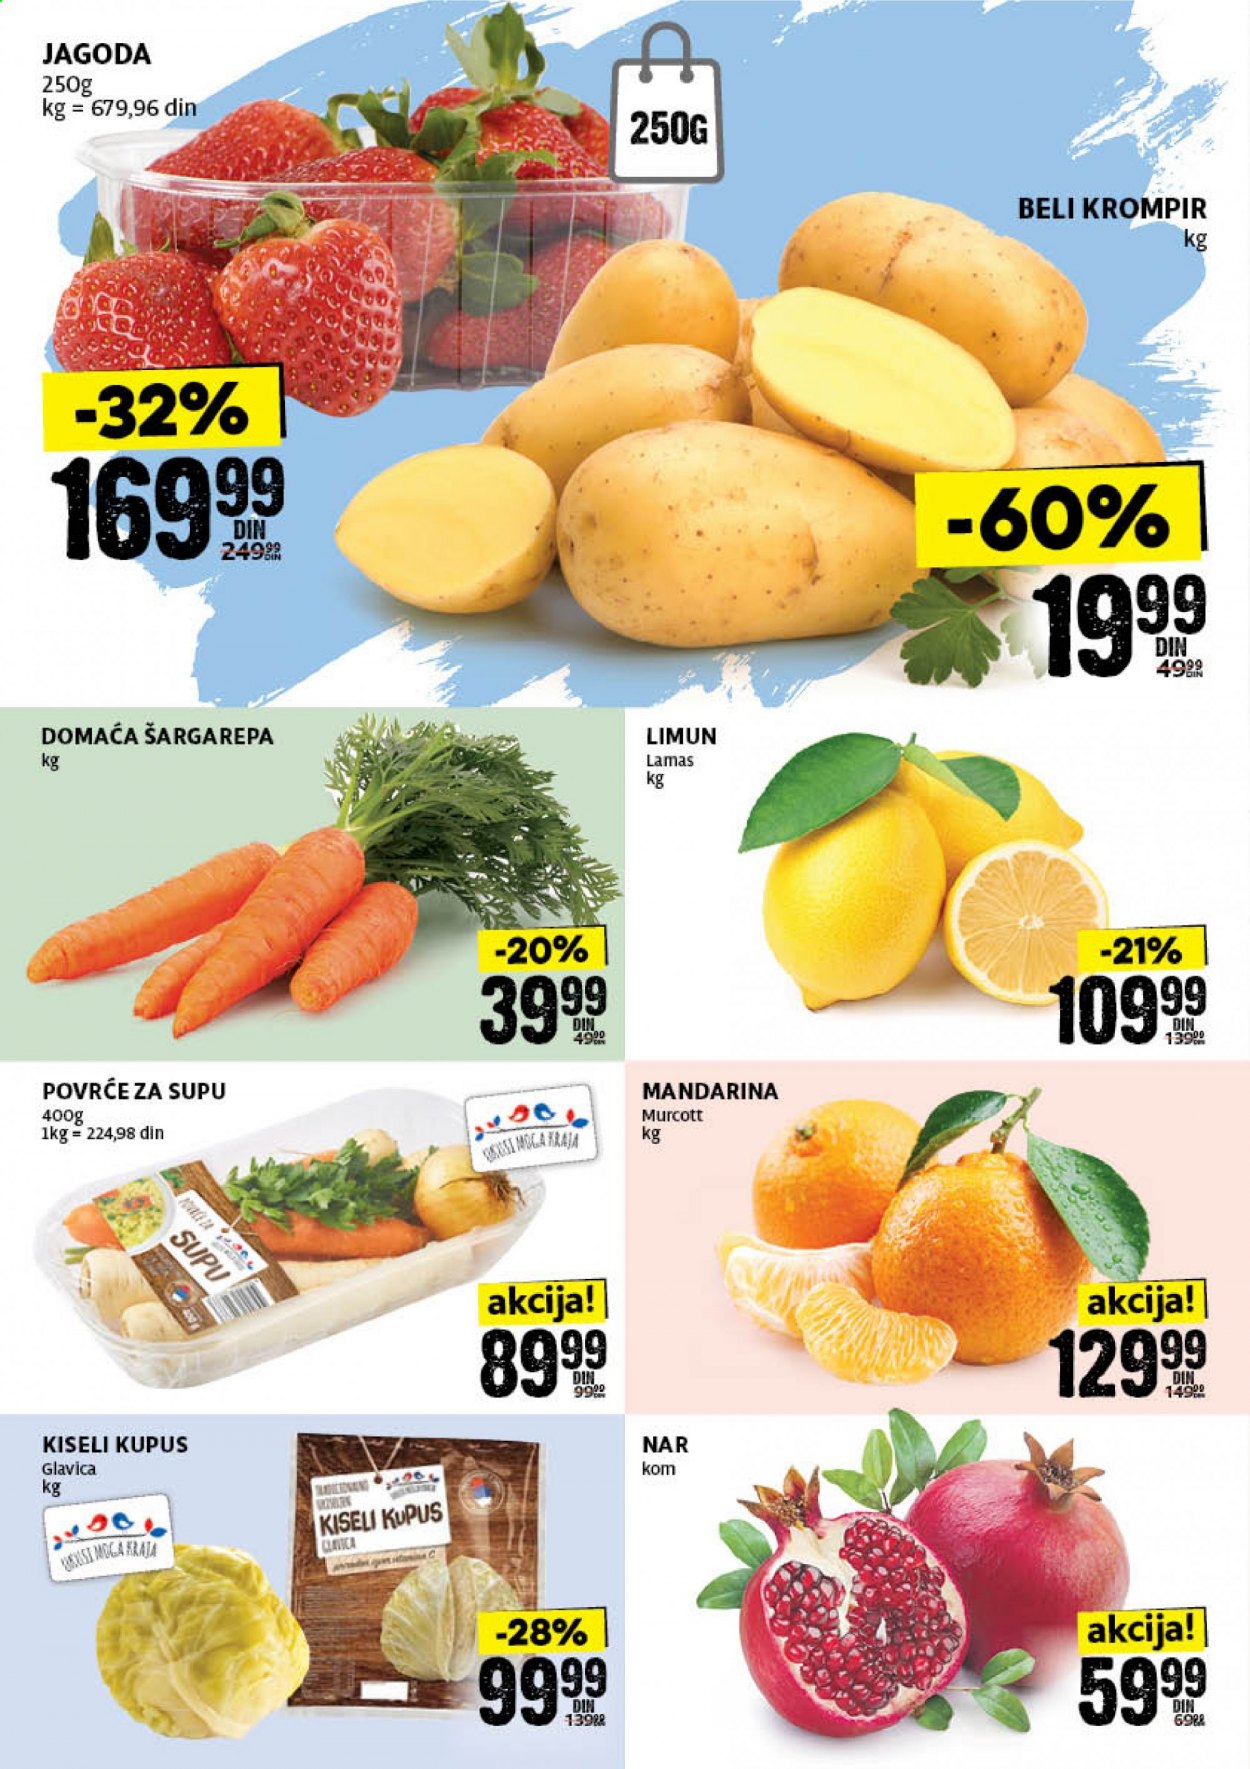 thumbnail - Roda katalog - 19.02.2021 - 25.02.2021 - Proizvodi na akciji - krompir, šargarepa, beli krompir, povrće za supu, limun, mandarina, nar, jagoda, kiseli kupus. Stranica 2.